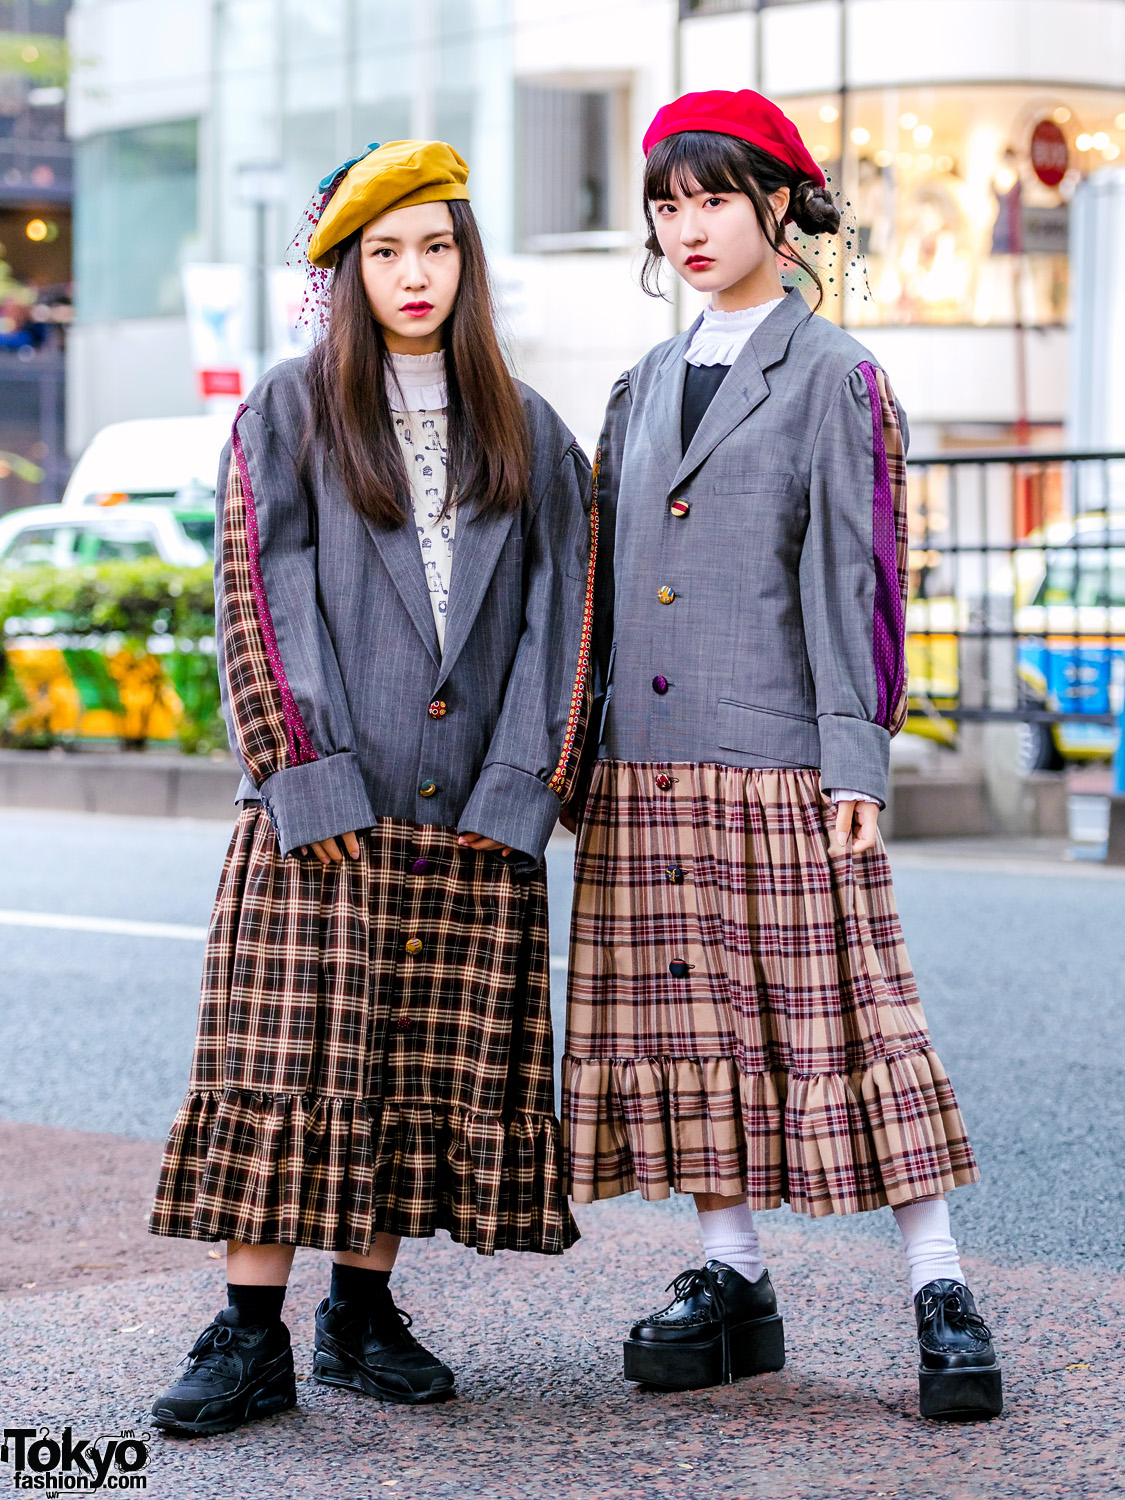 HEIHEI Harajuku Girls in Plaid Streetwear Styles w/ Blazer, Plaid Skirt Dress, Veil Berets & Yosuke